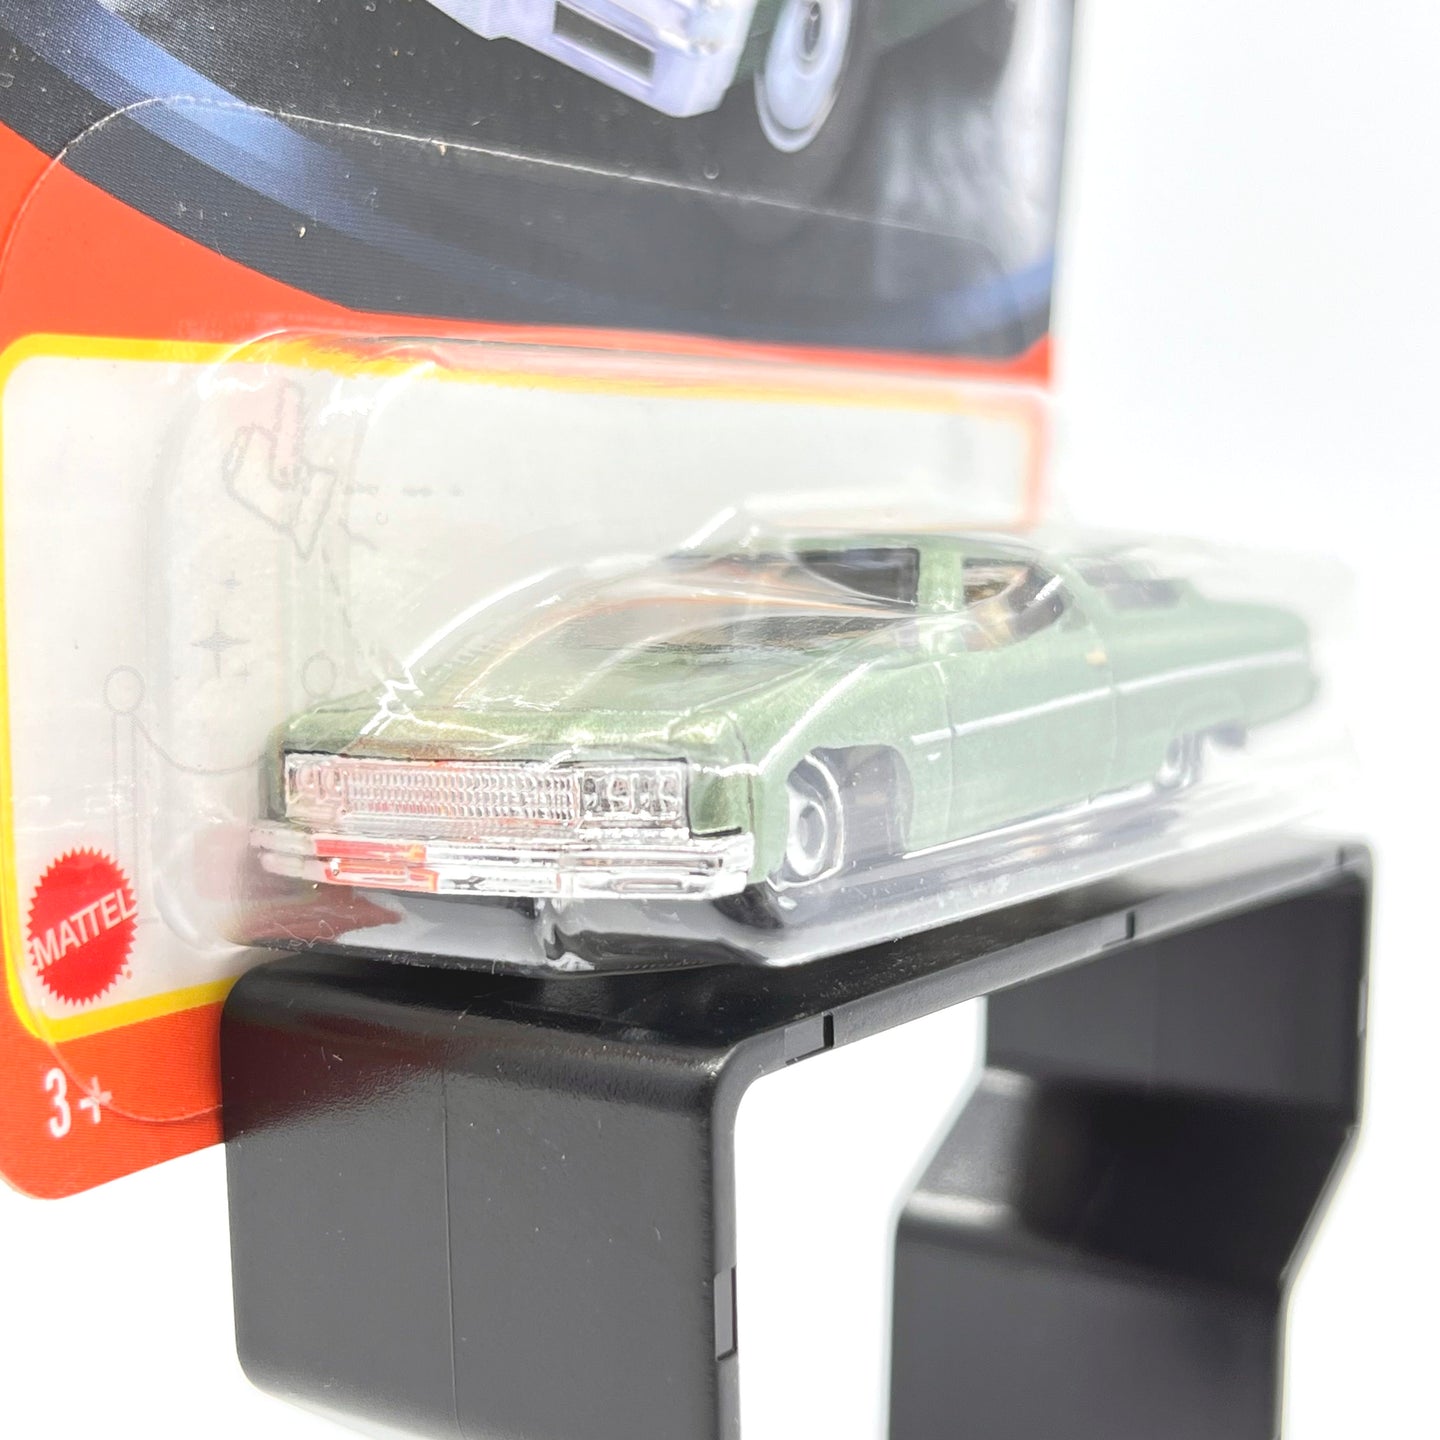 1975 Chevy Caprice Rare MatchBox Alloy Diecast Car Model